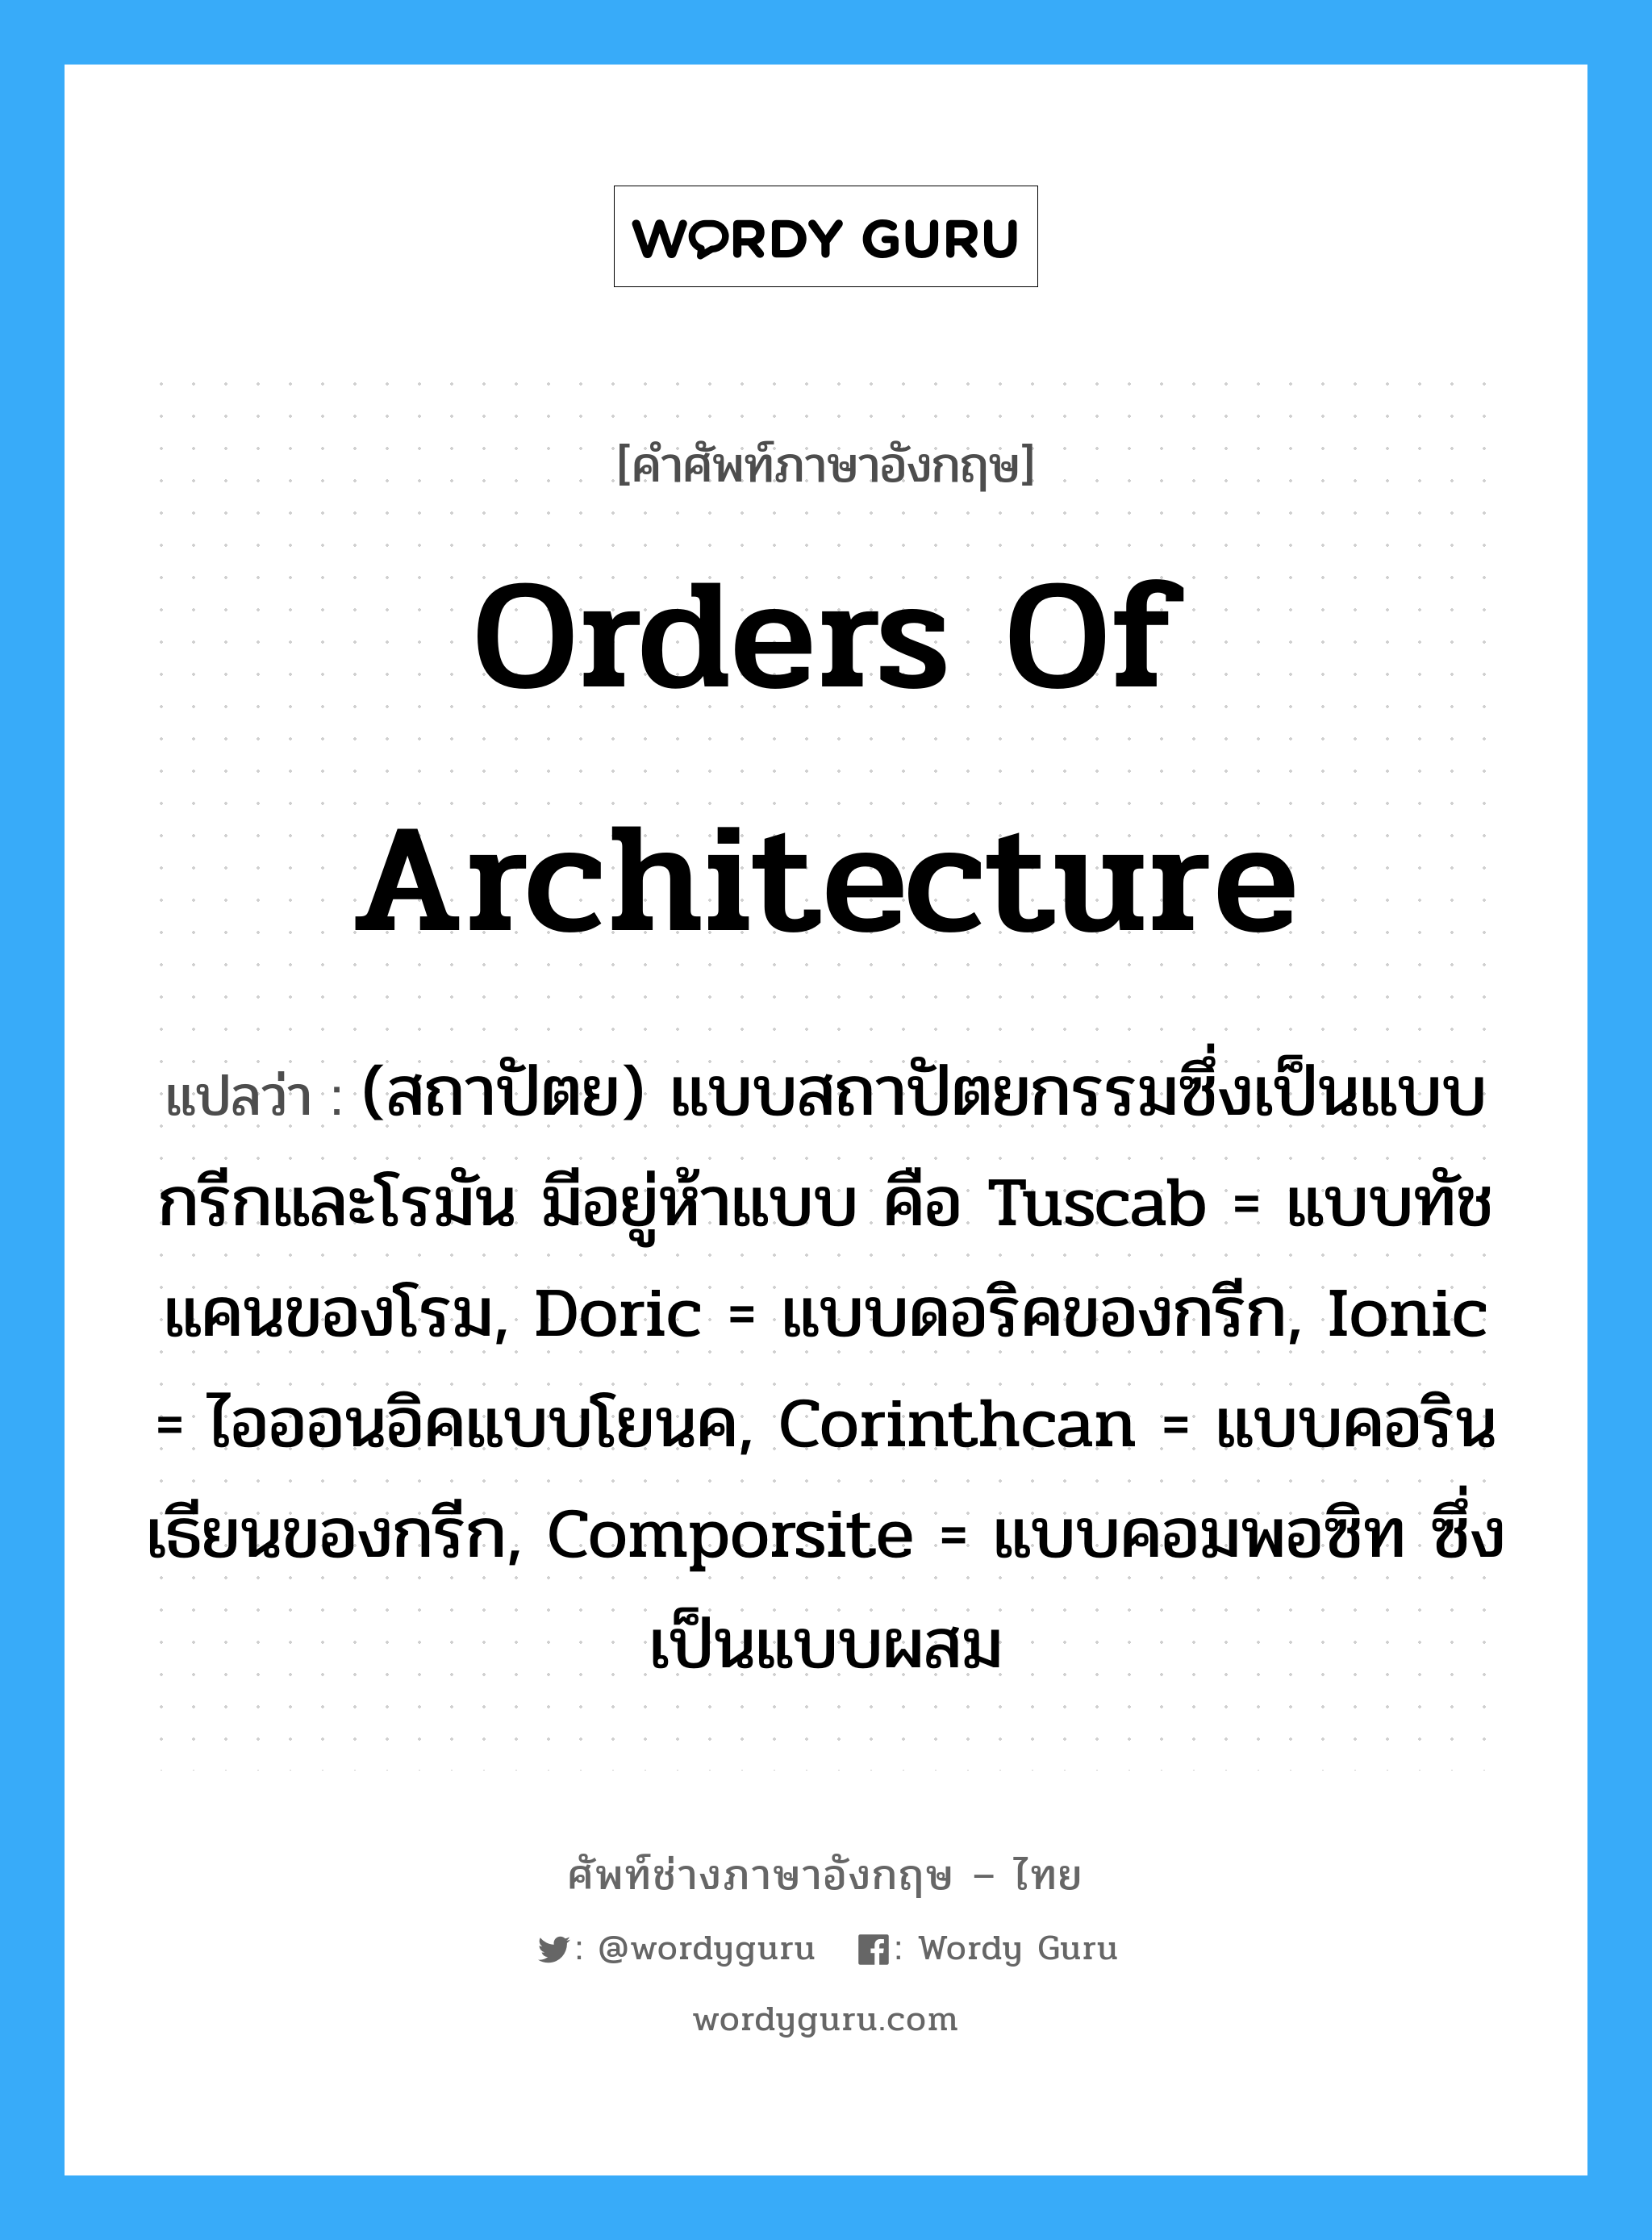 orders of architecture แปลว่า?, คำศัพท์ช่างภาษาอังกฤษ - ไทย orders of architecture คำศัพท์ภาษาอังกฤษ orders of architecture แปลว่า (สถาปัตย) แบบสถาปัตยกรรมซึ่งเป็นแบบกรีกและโรมัน มีอยู่ห้าแบบ คือ Tuscab = แบบทัชแคนของโรม, Doric = แบบดอริคของกรีก, Ionic = ไอออนอิคแบบโยนค, Corinthcan = แบบคอรินเธียนของกรีก, Comporsite = แบบคอมพอซิท ซึ่งเป็นแบบผสม